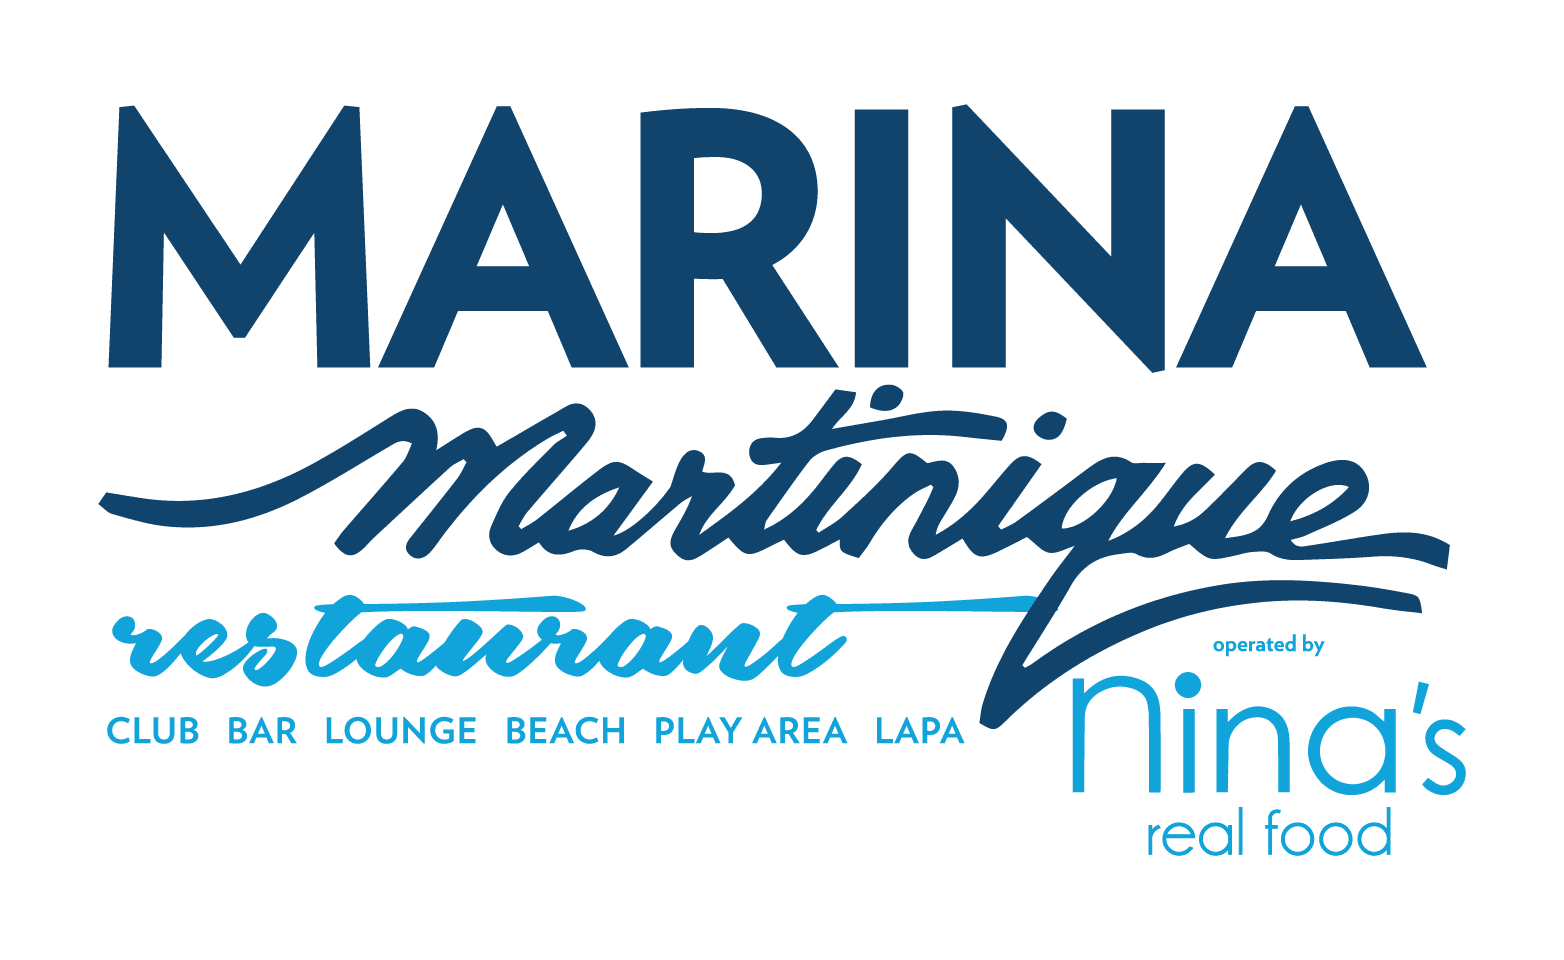 Nina’s Marina Martinique Restaurant